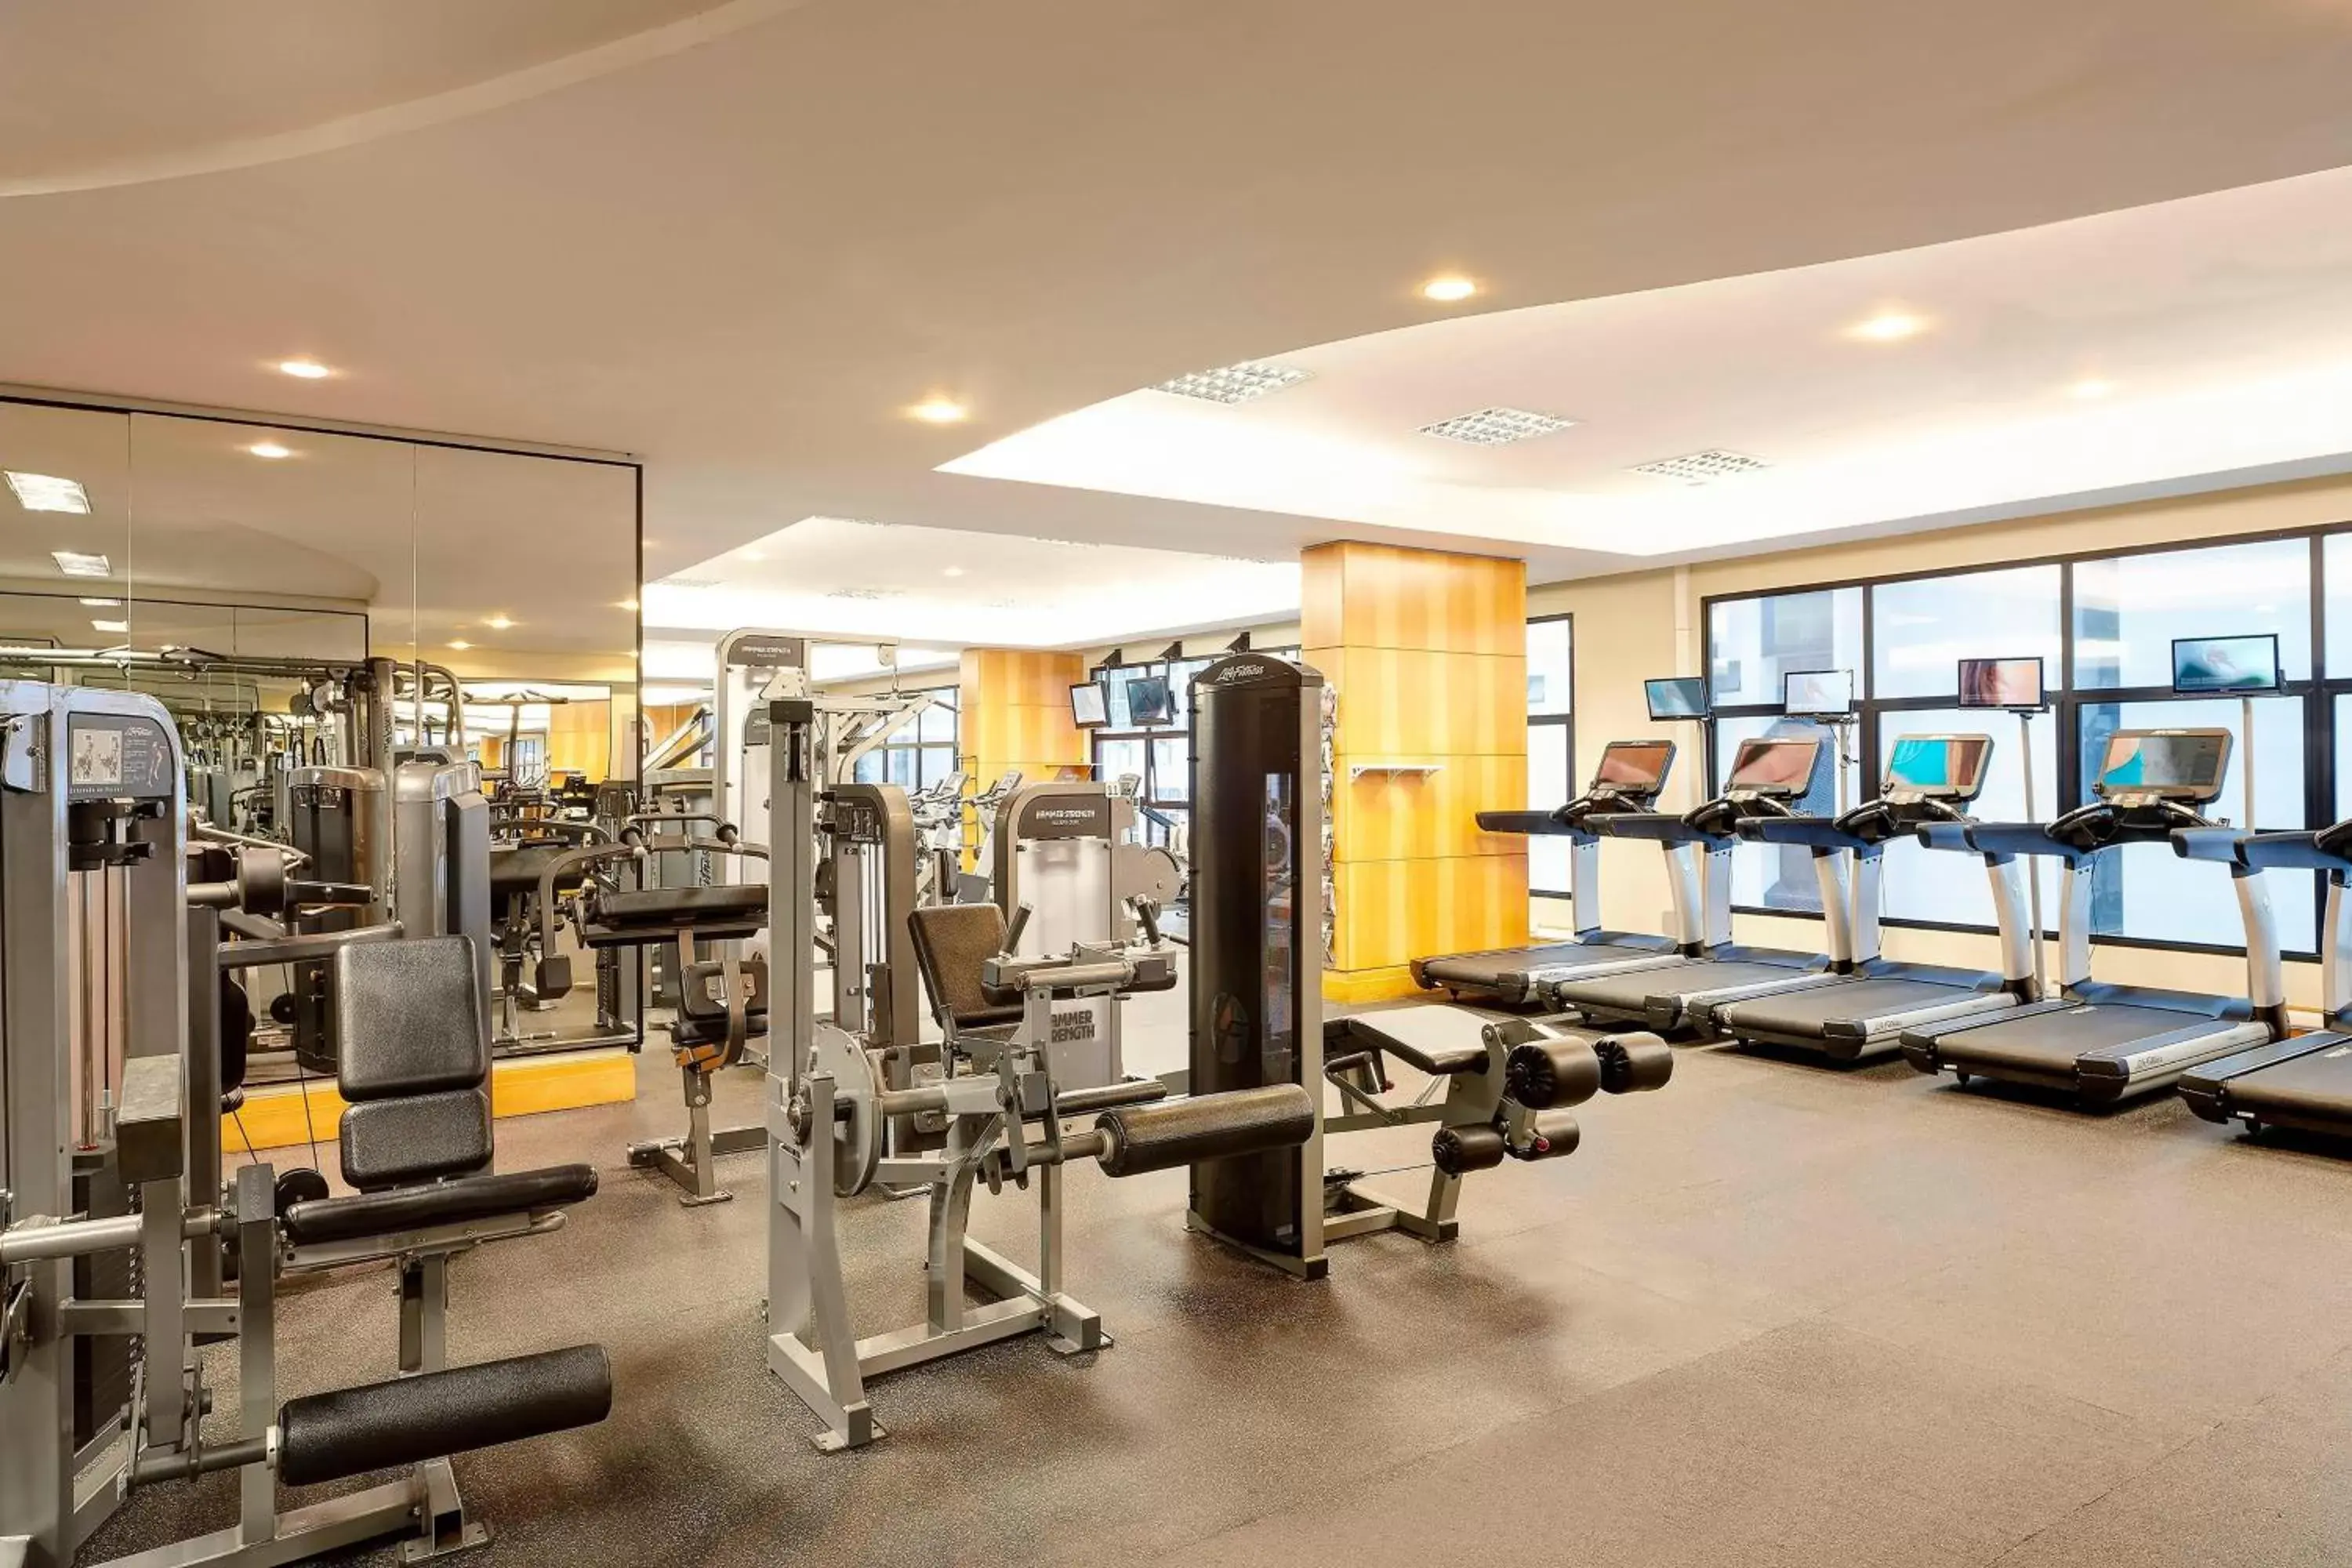 Fitness centre/facilities, Fitness Center/Facilities in Renaissance São Paulo Hotel